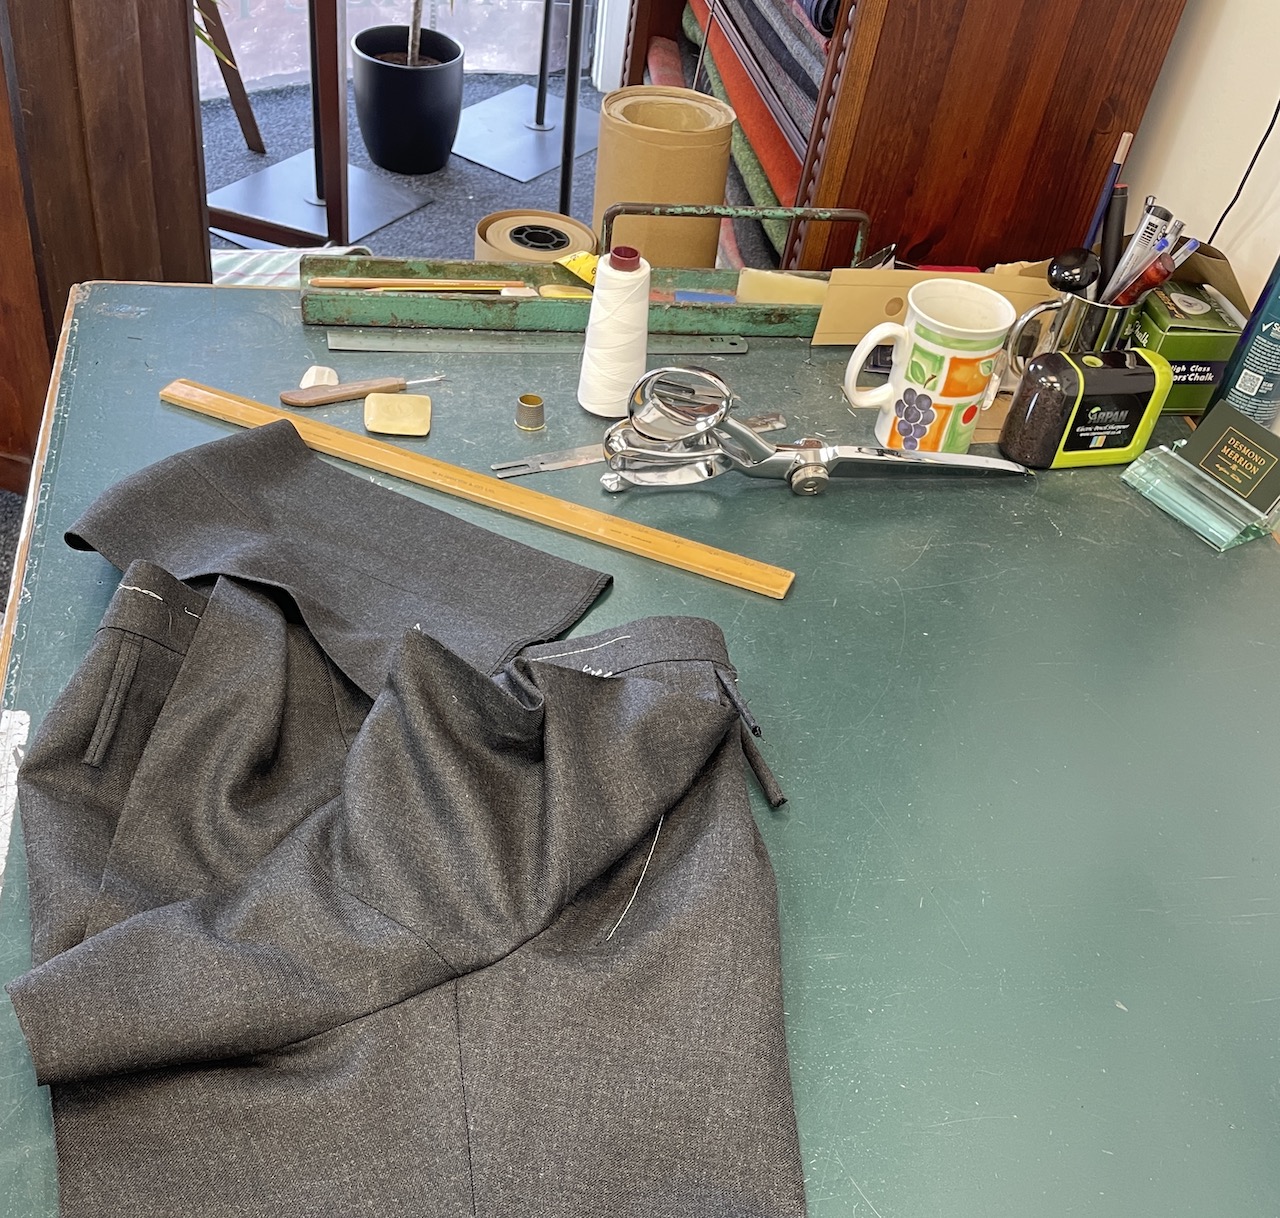 Bespoke Tailoring Tools on Workbench